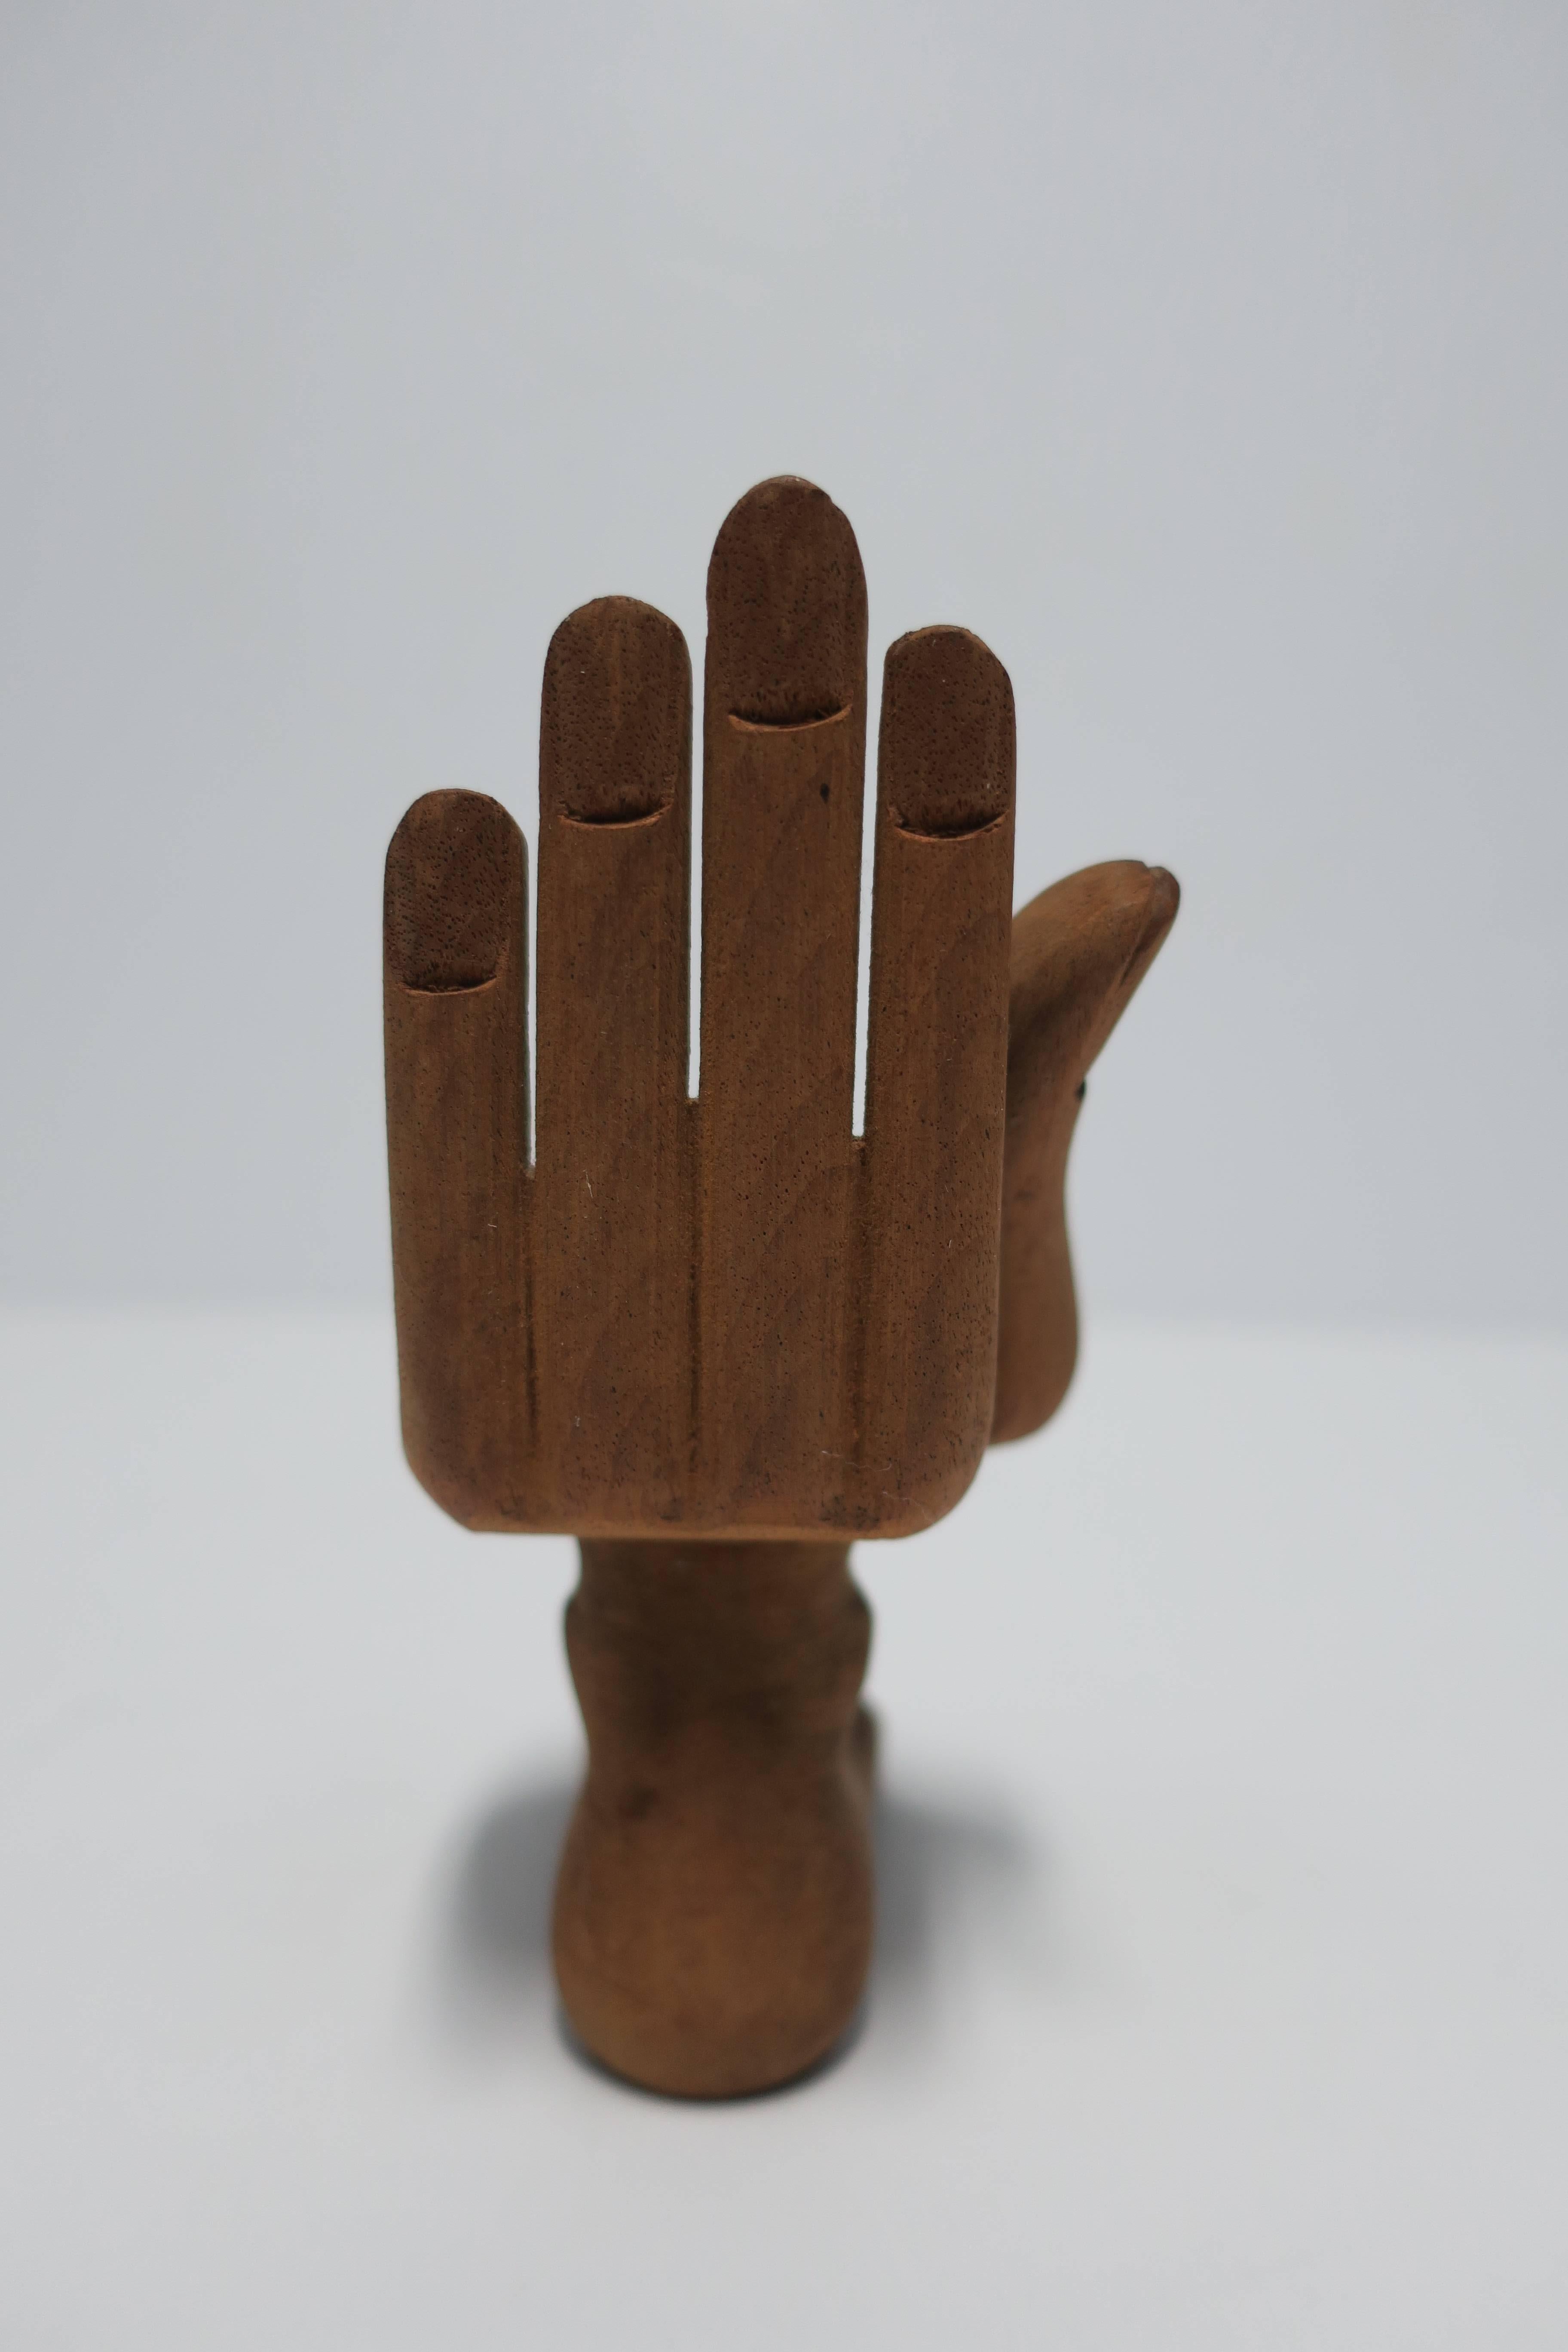 Pedro Friedeberg Hand Chair Decorative Object Sculpture 2